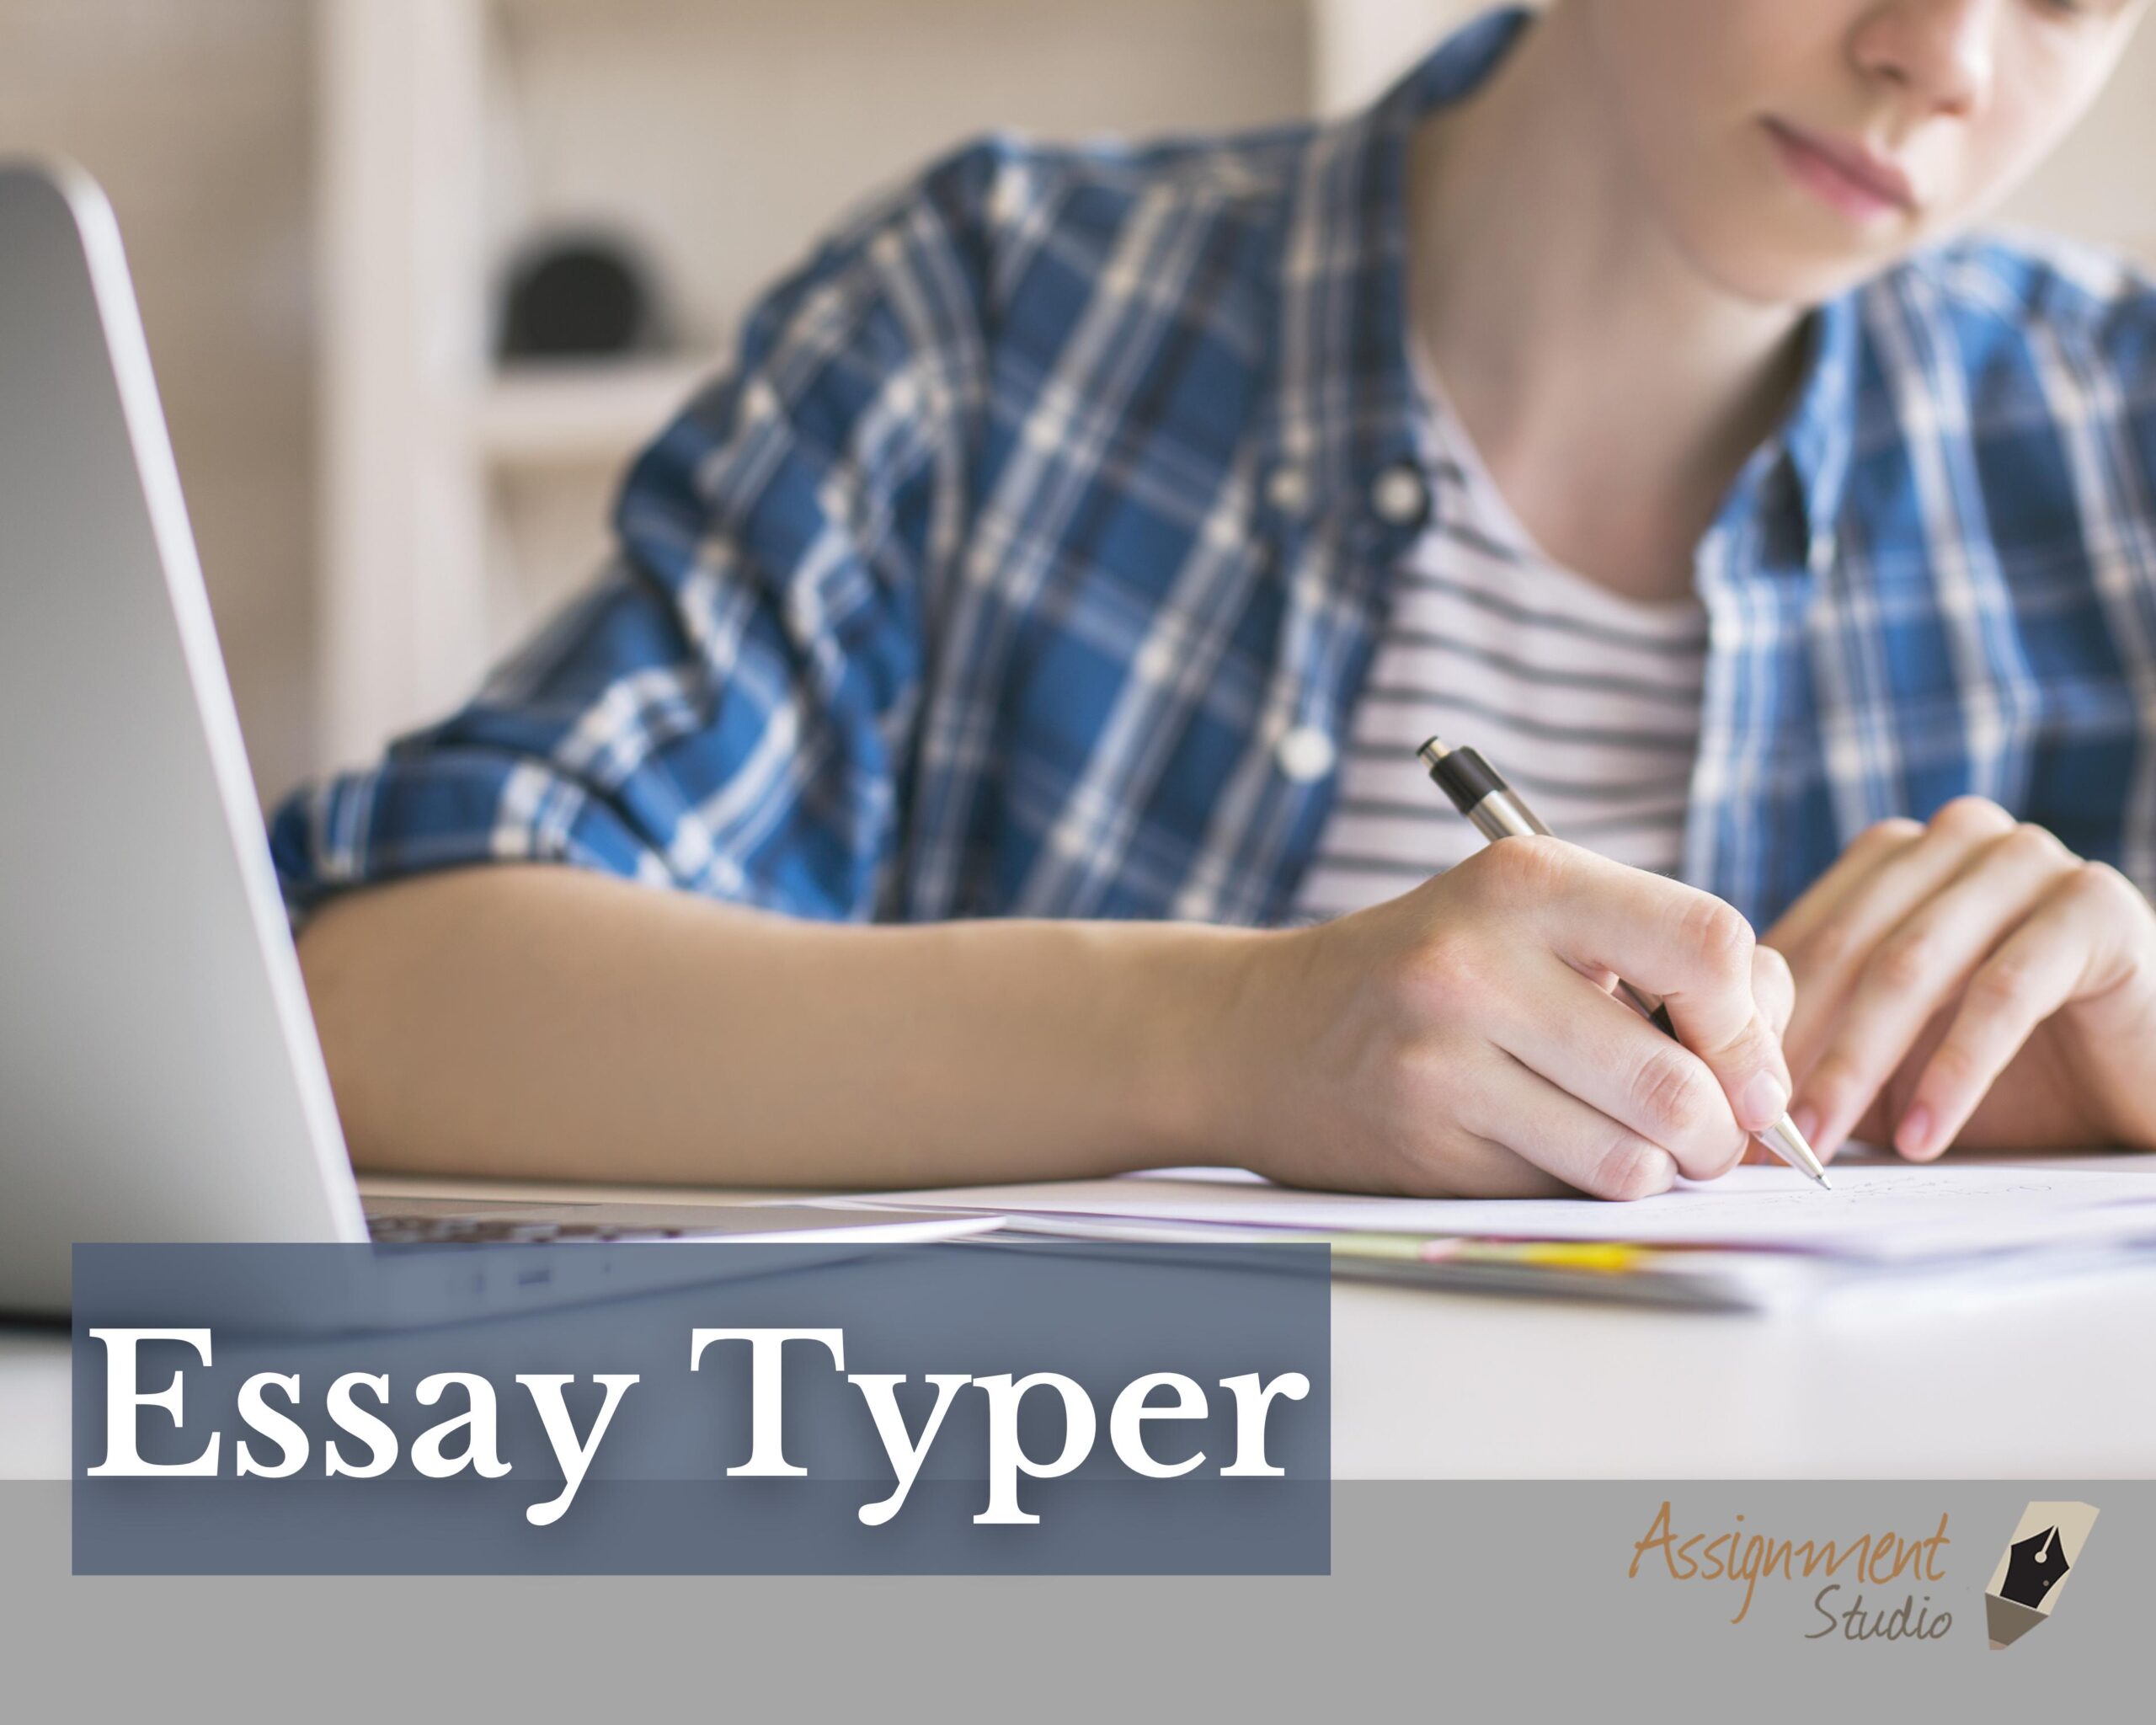 my assignment help essay typer